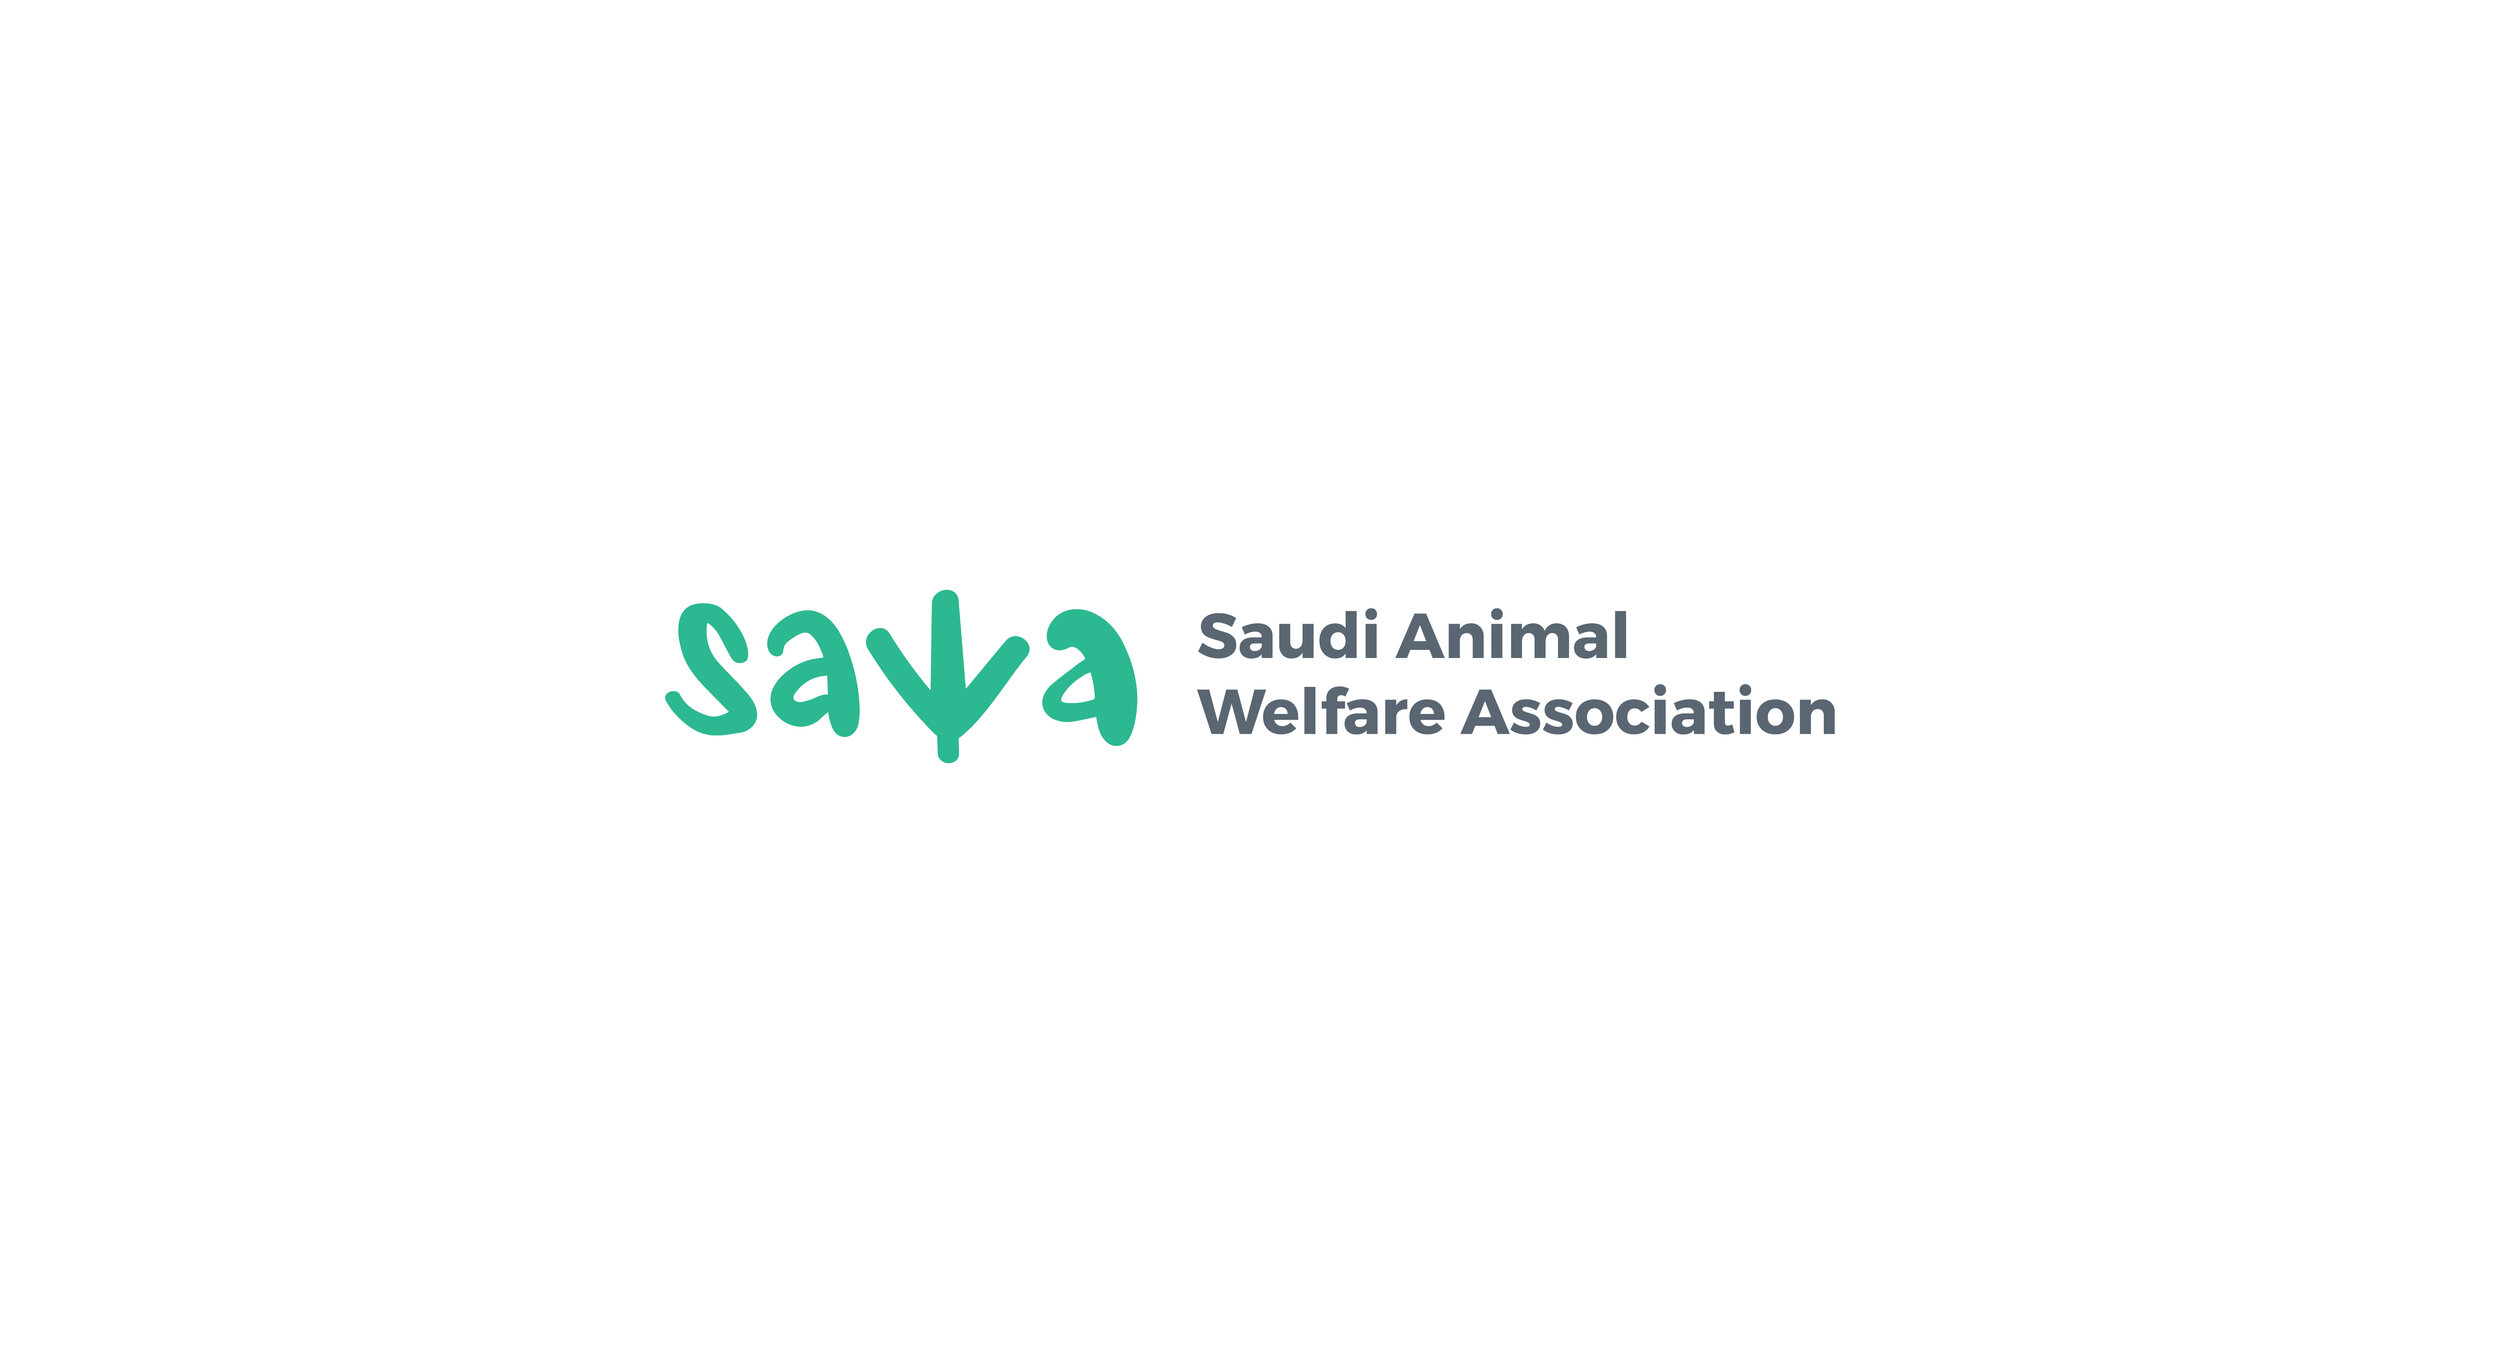 Saudi Animal Welfare Association